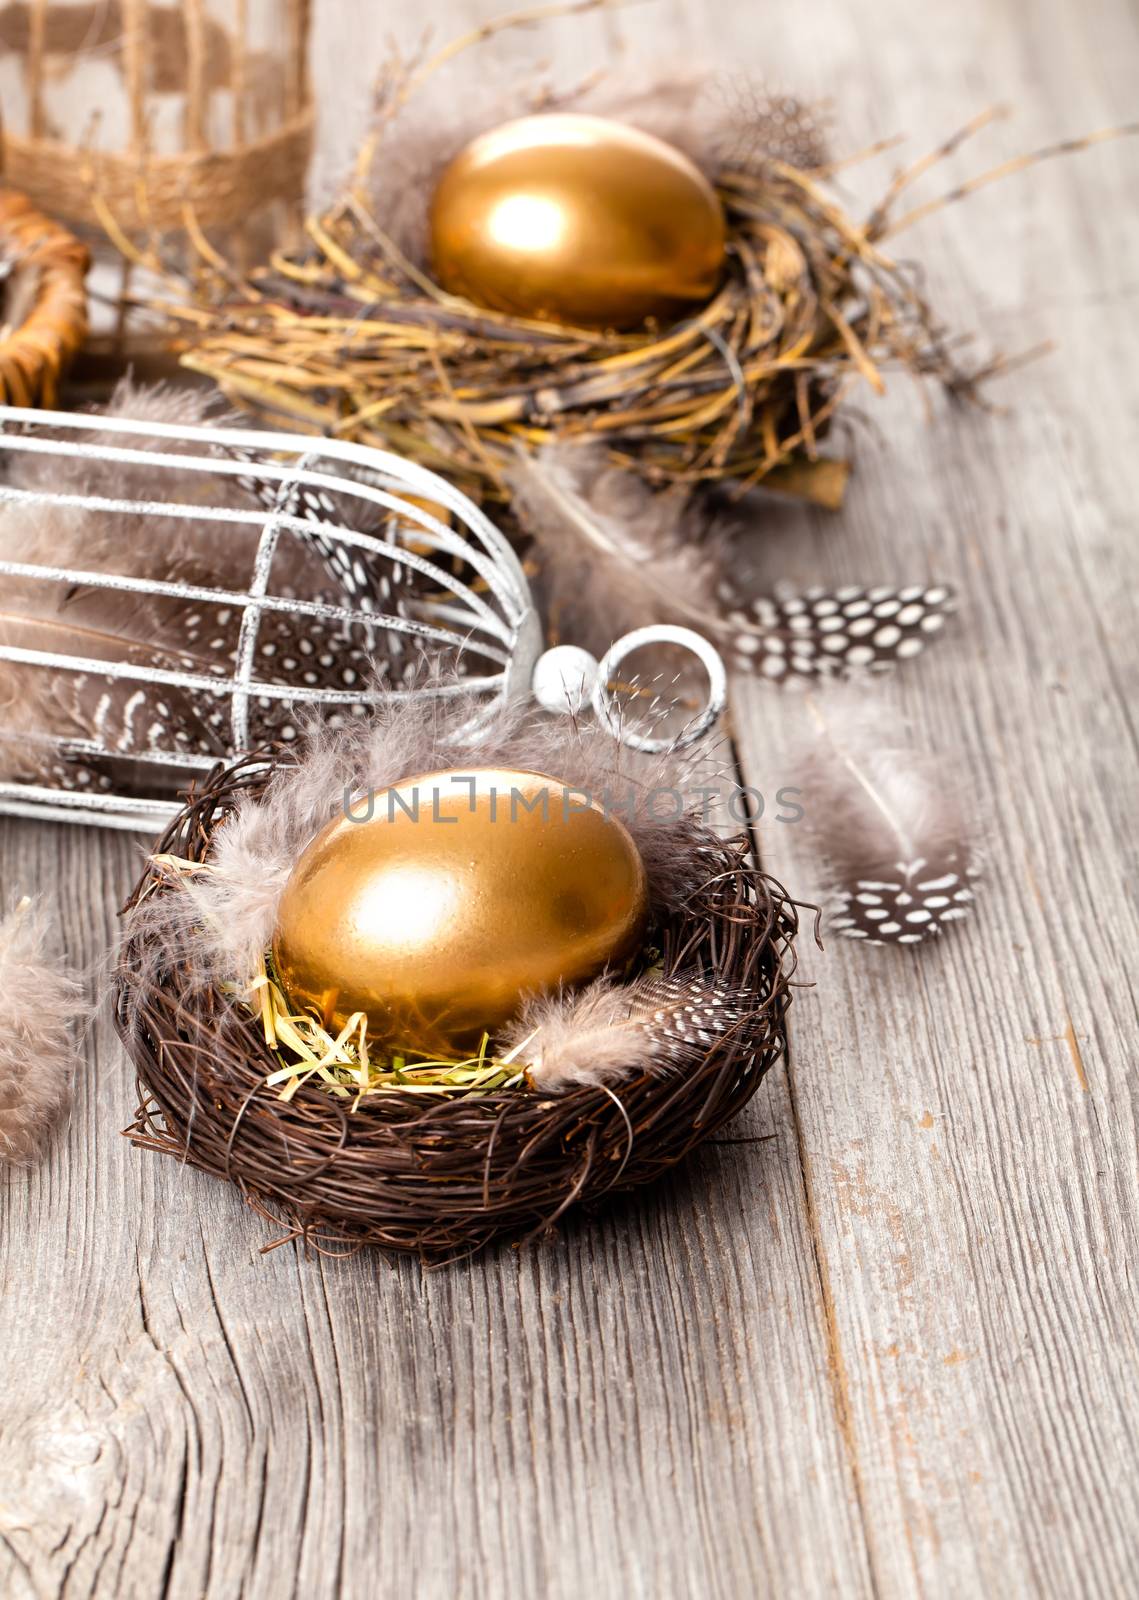 golden egg of chickens in nest, on wooden background by motorolka